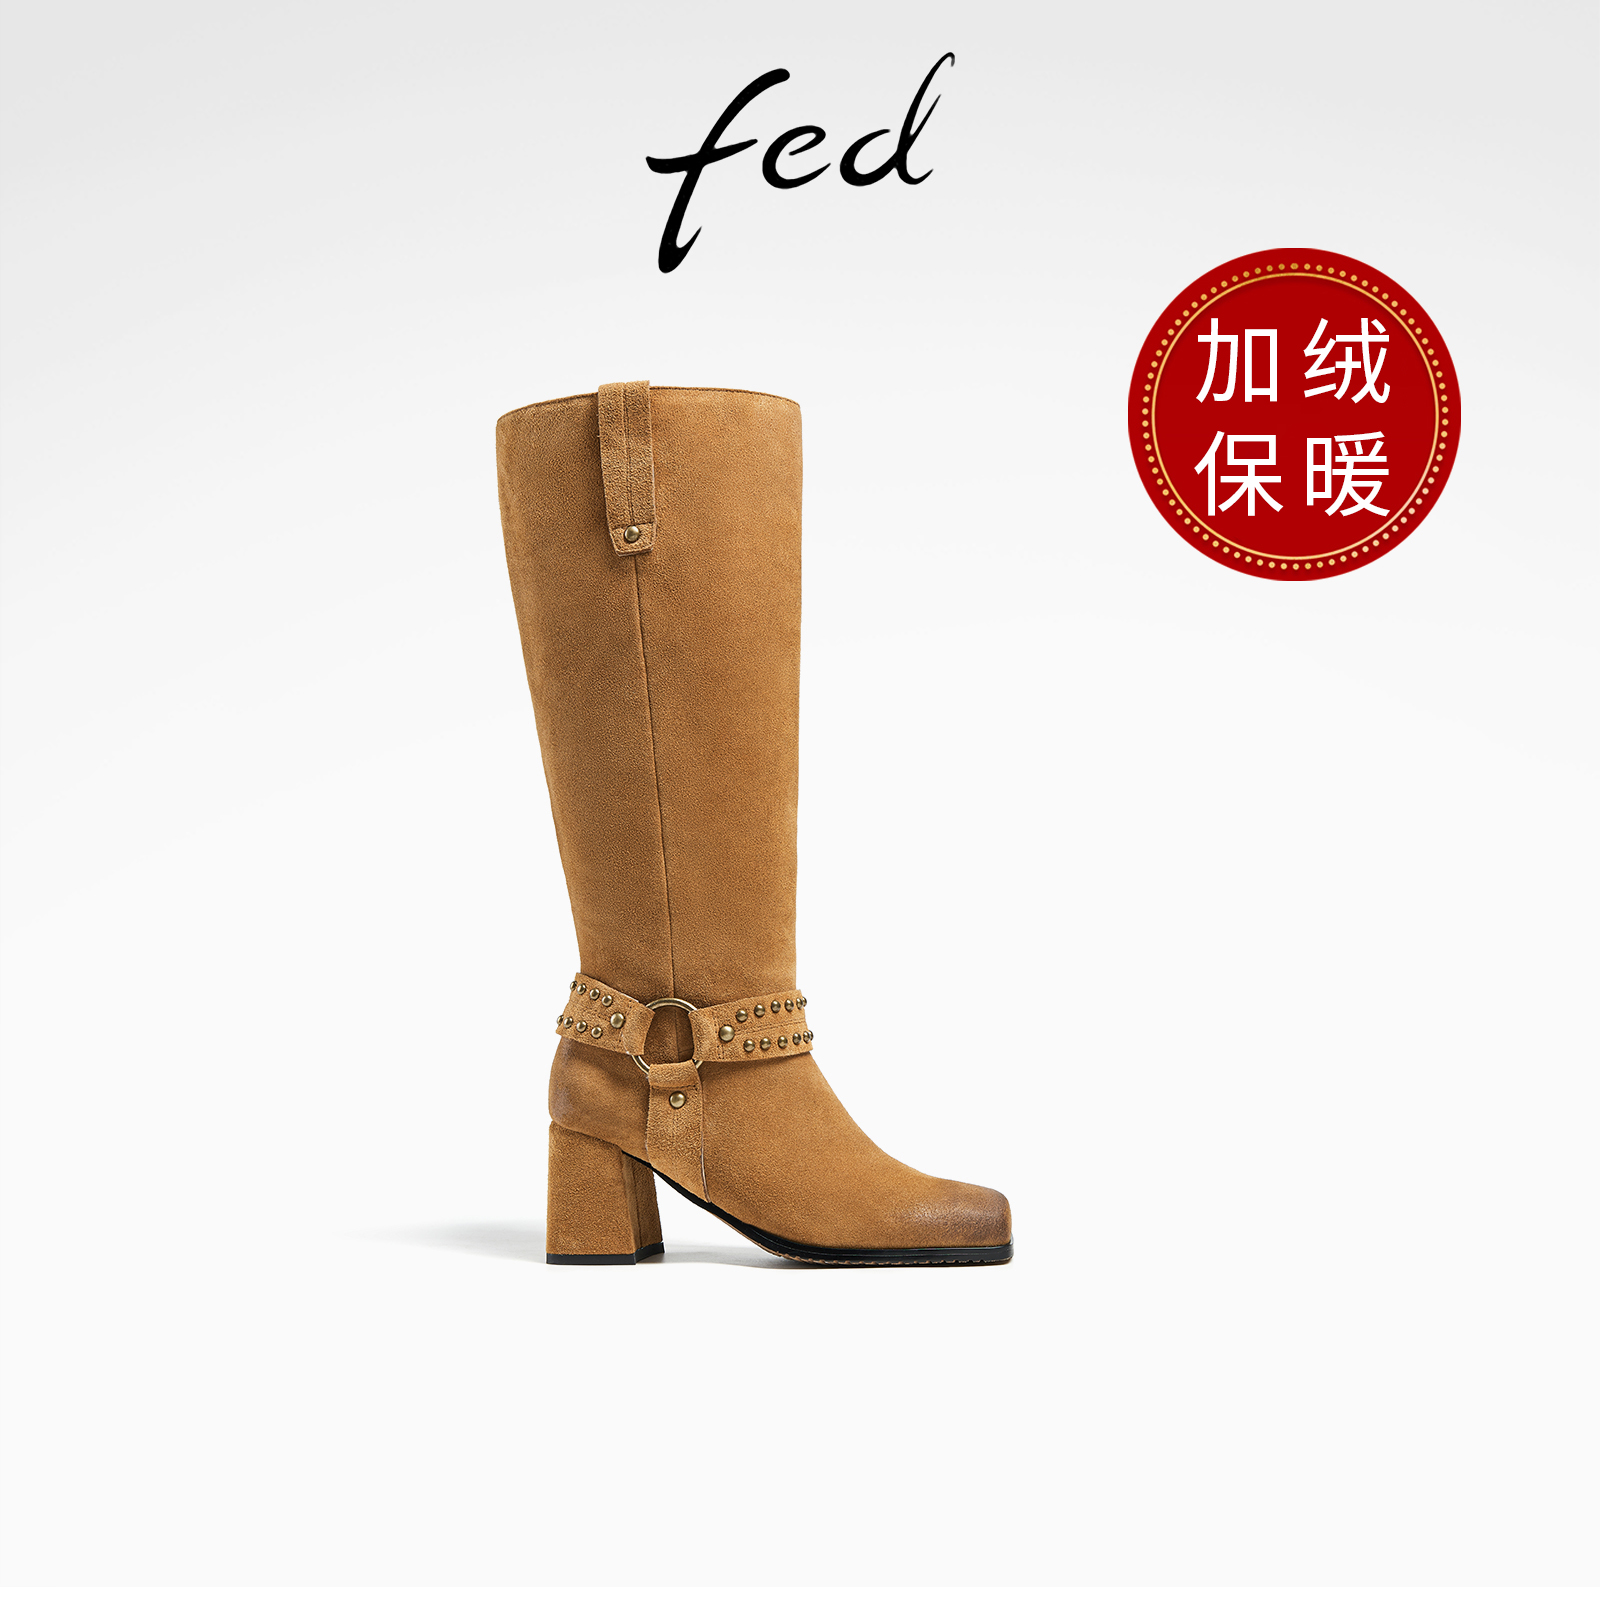 fed高跟长靴冬季新款靴子绒面时装靴加绒西部靴女款R1220-ZFB366